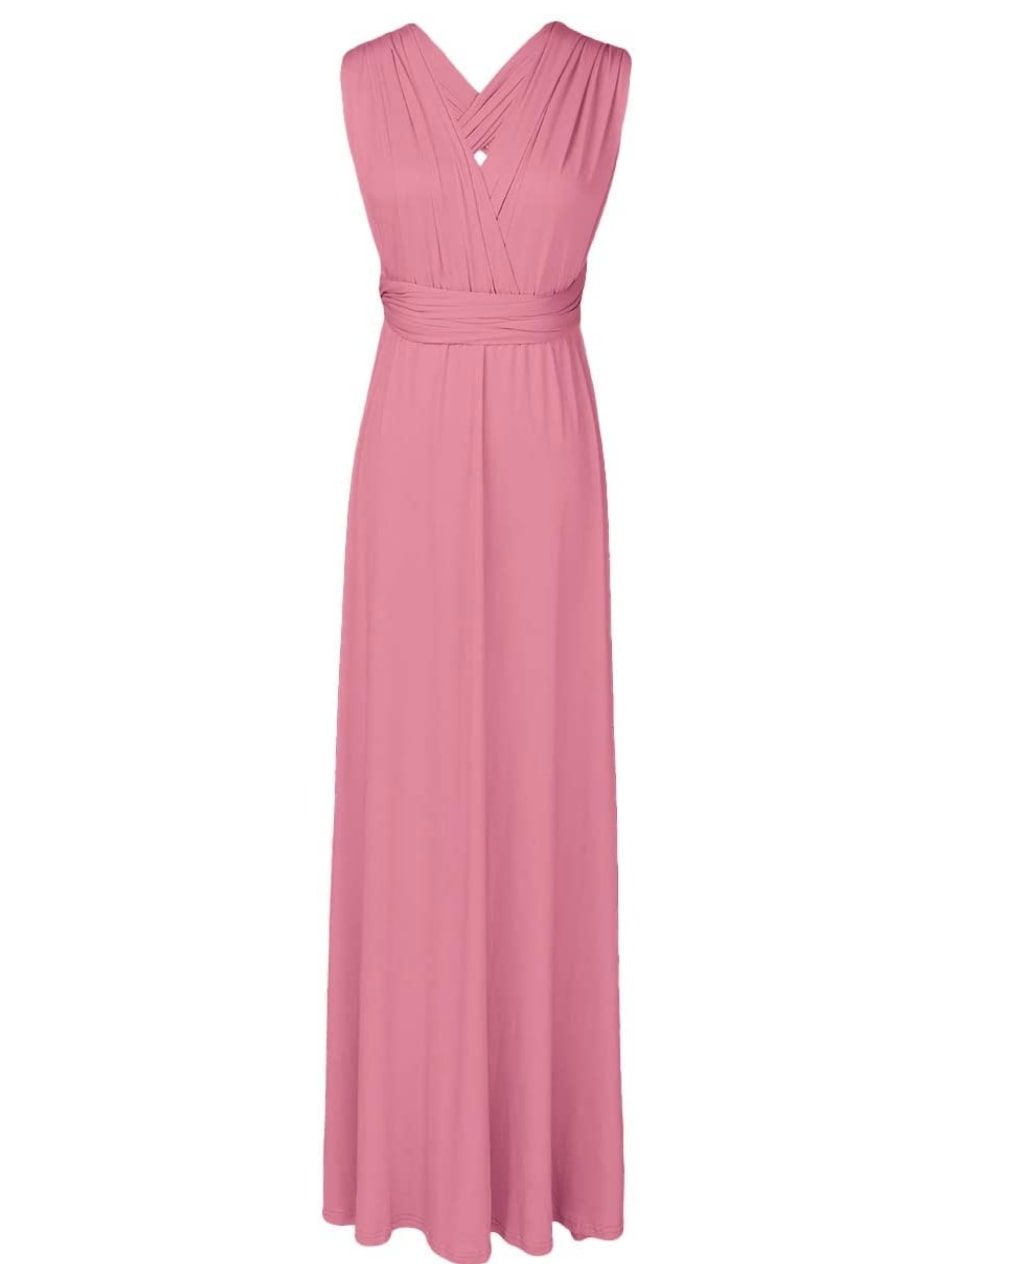 Style B073CGBPLG IWEMEK Size 4 Bridesmaid Pink Floor Length Maxi on Queenly